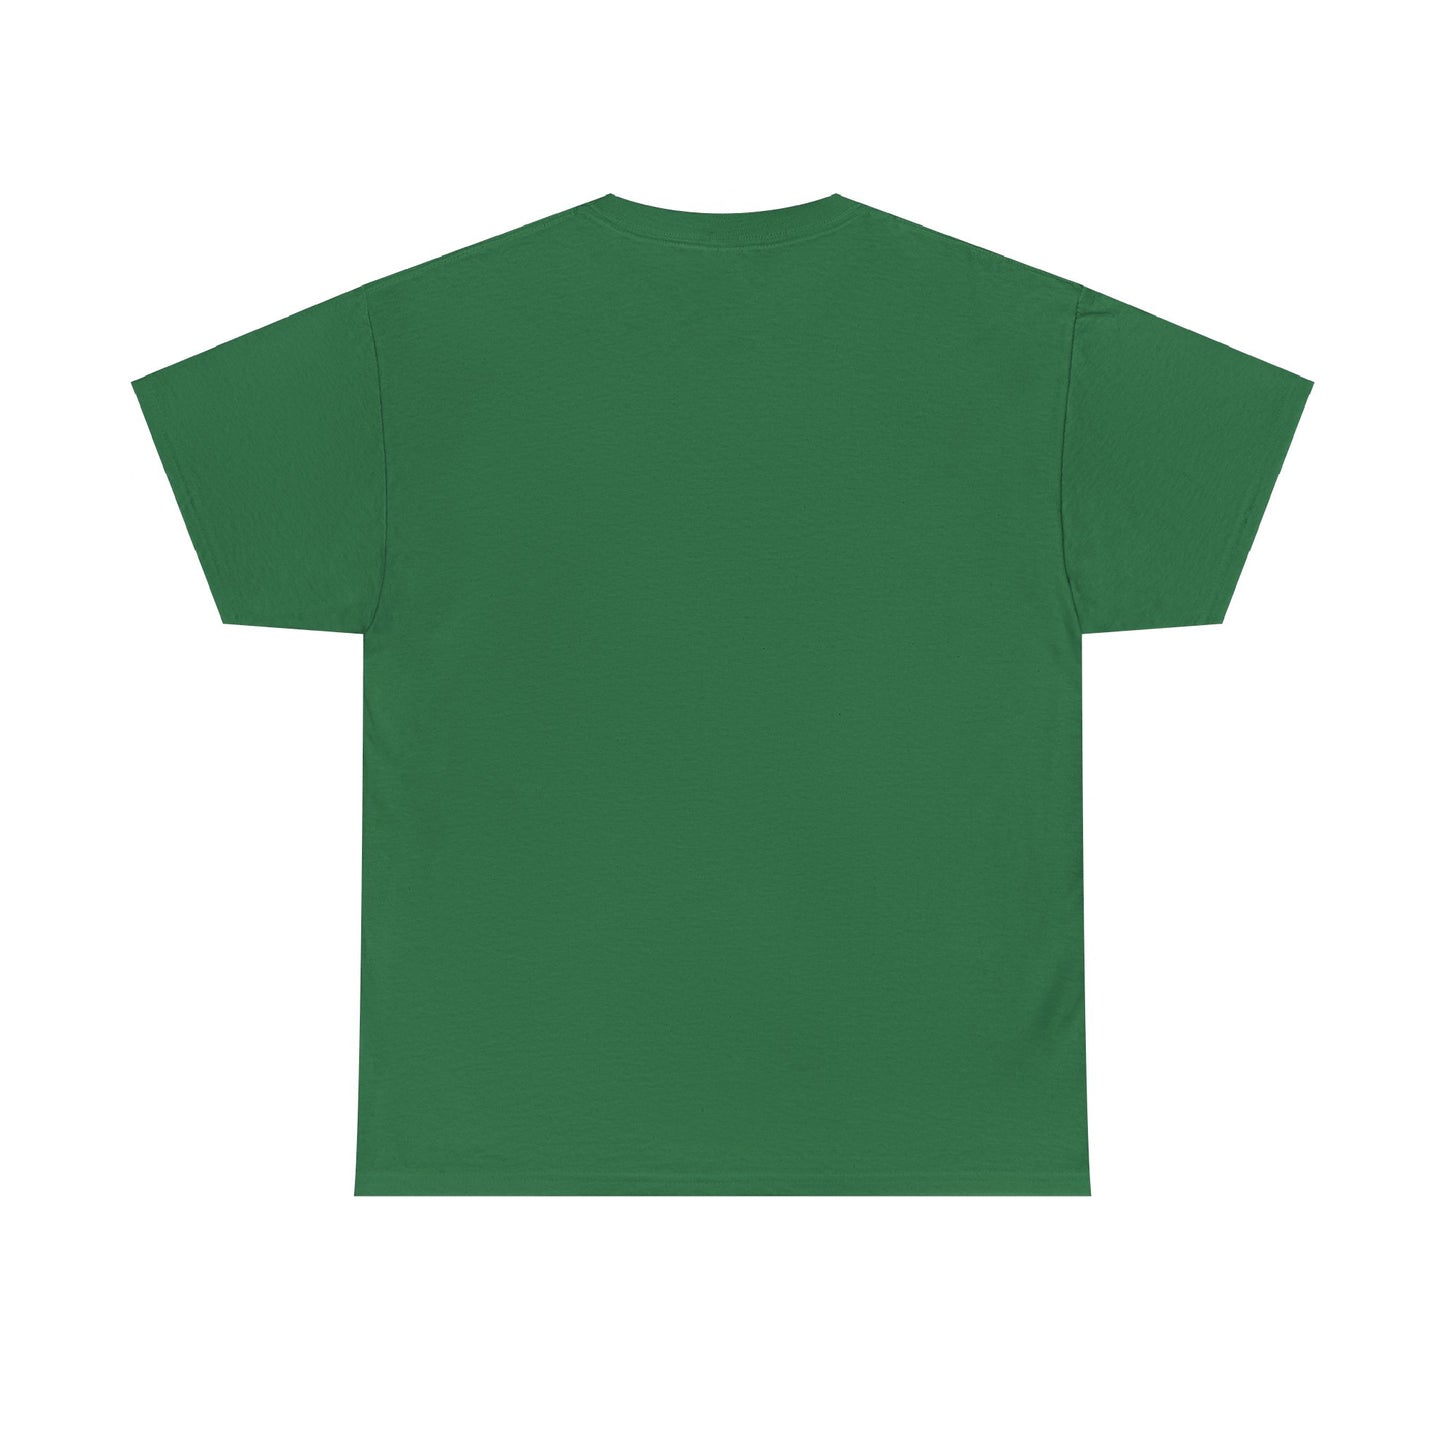 Save Palestine Club T shirt